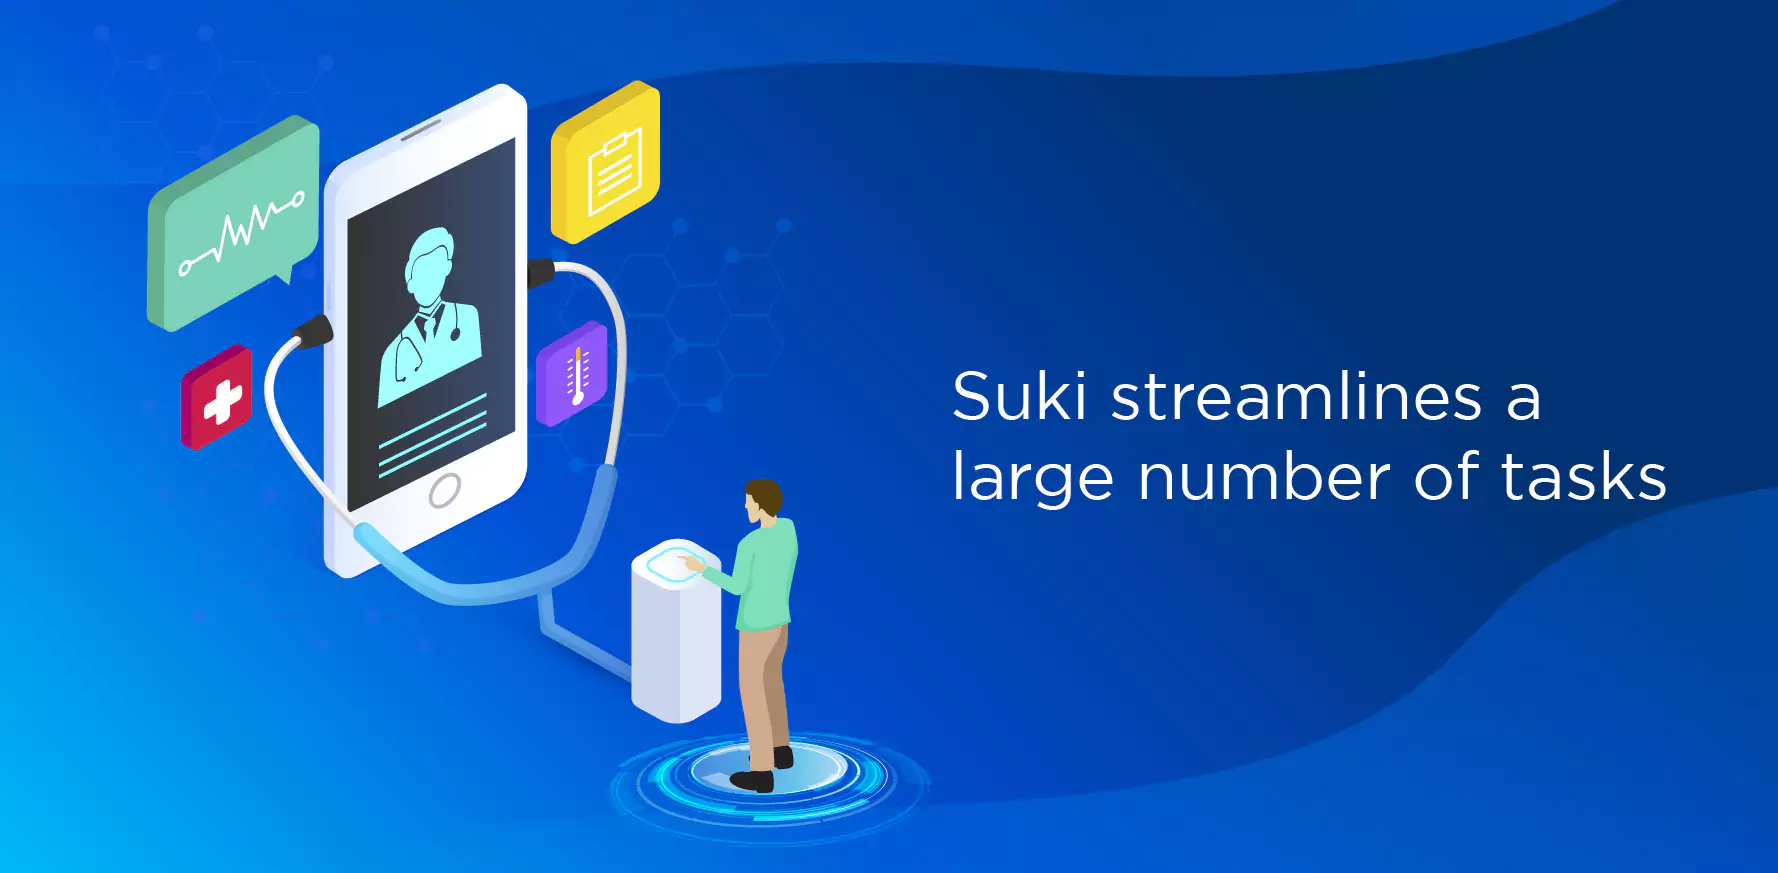 Suki streamlines a large number of tasks